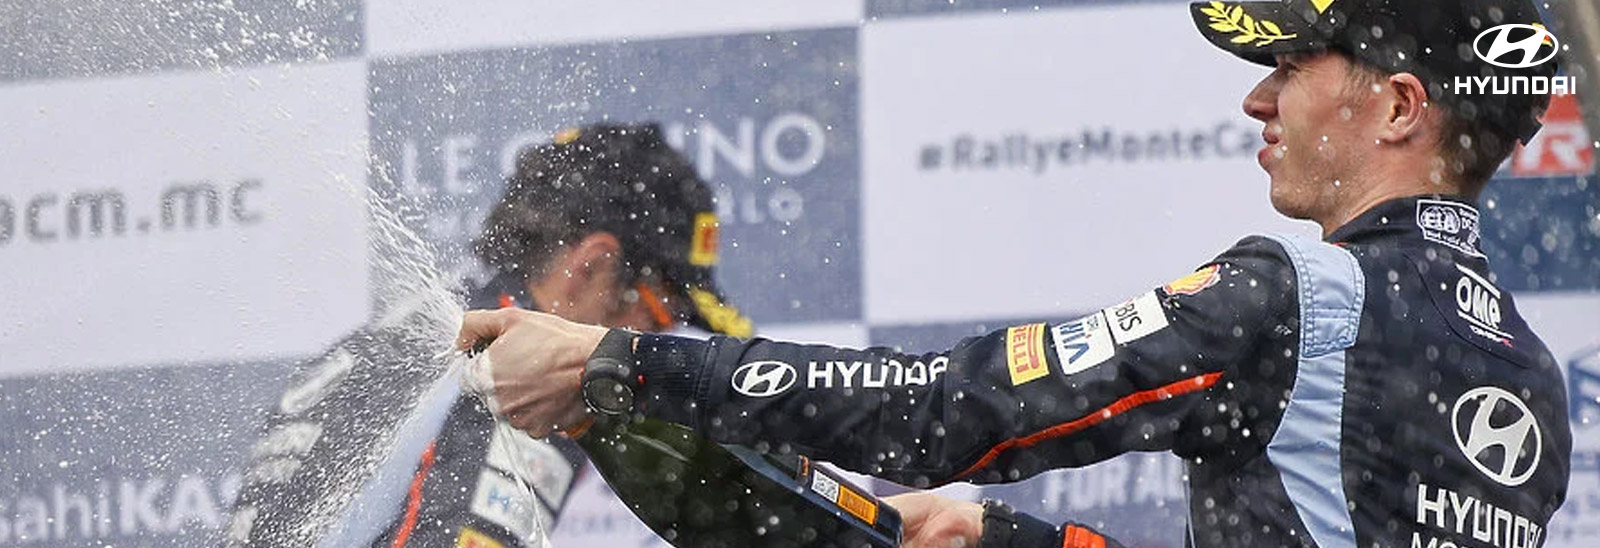 Pilotos Hyundai Motorsport celebrando victoria